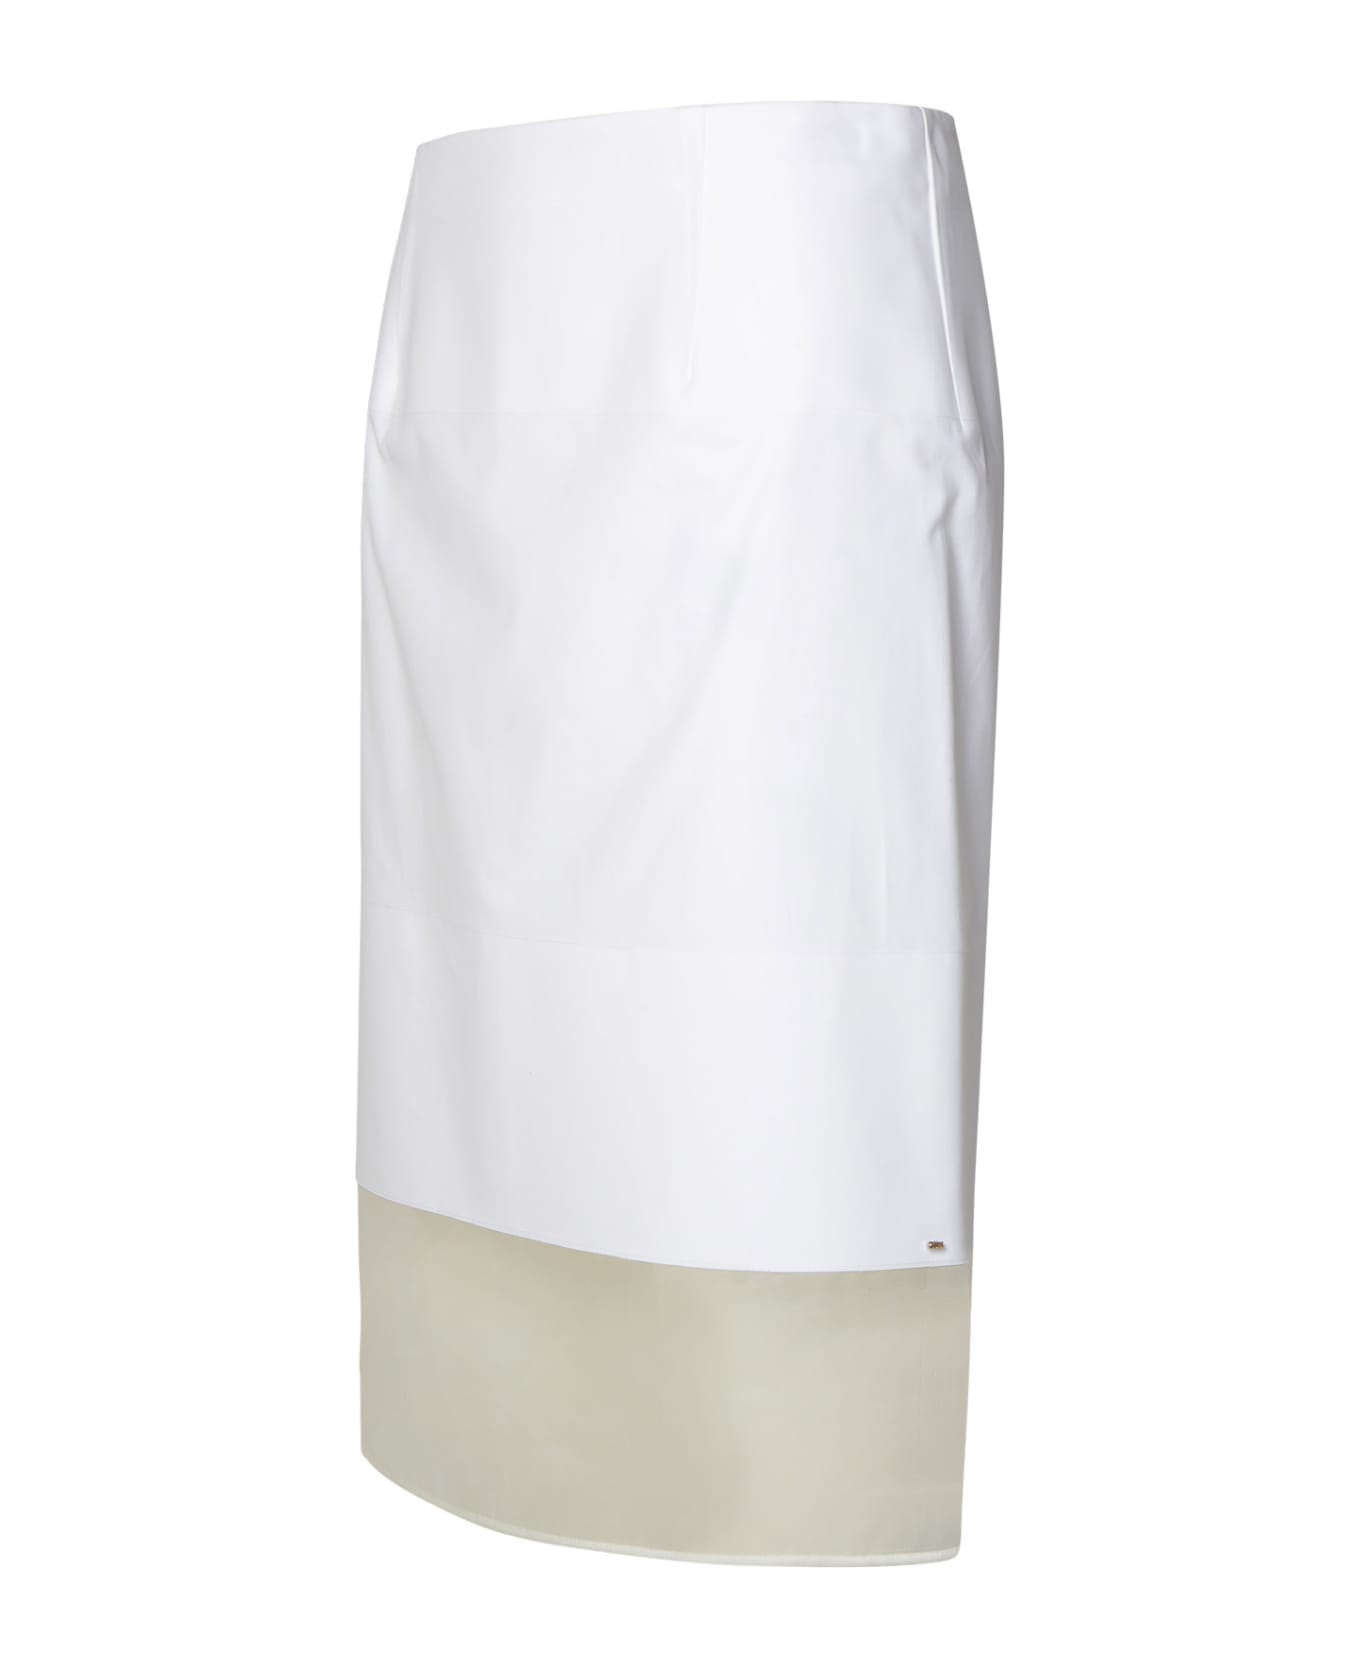 SportMax 'turchia' White Cotton Skirt - White